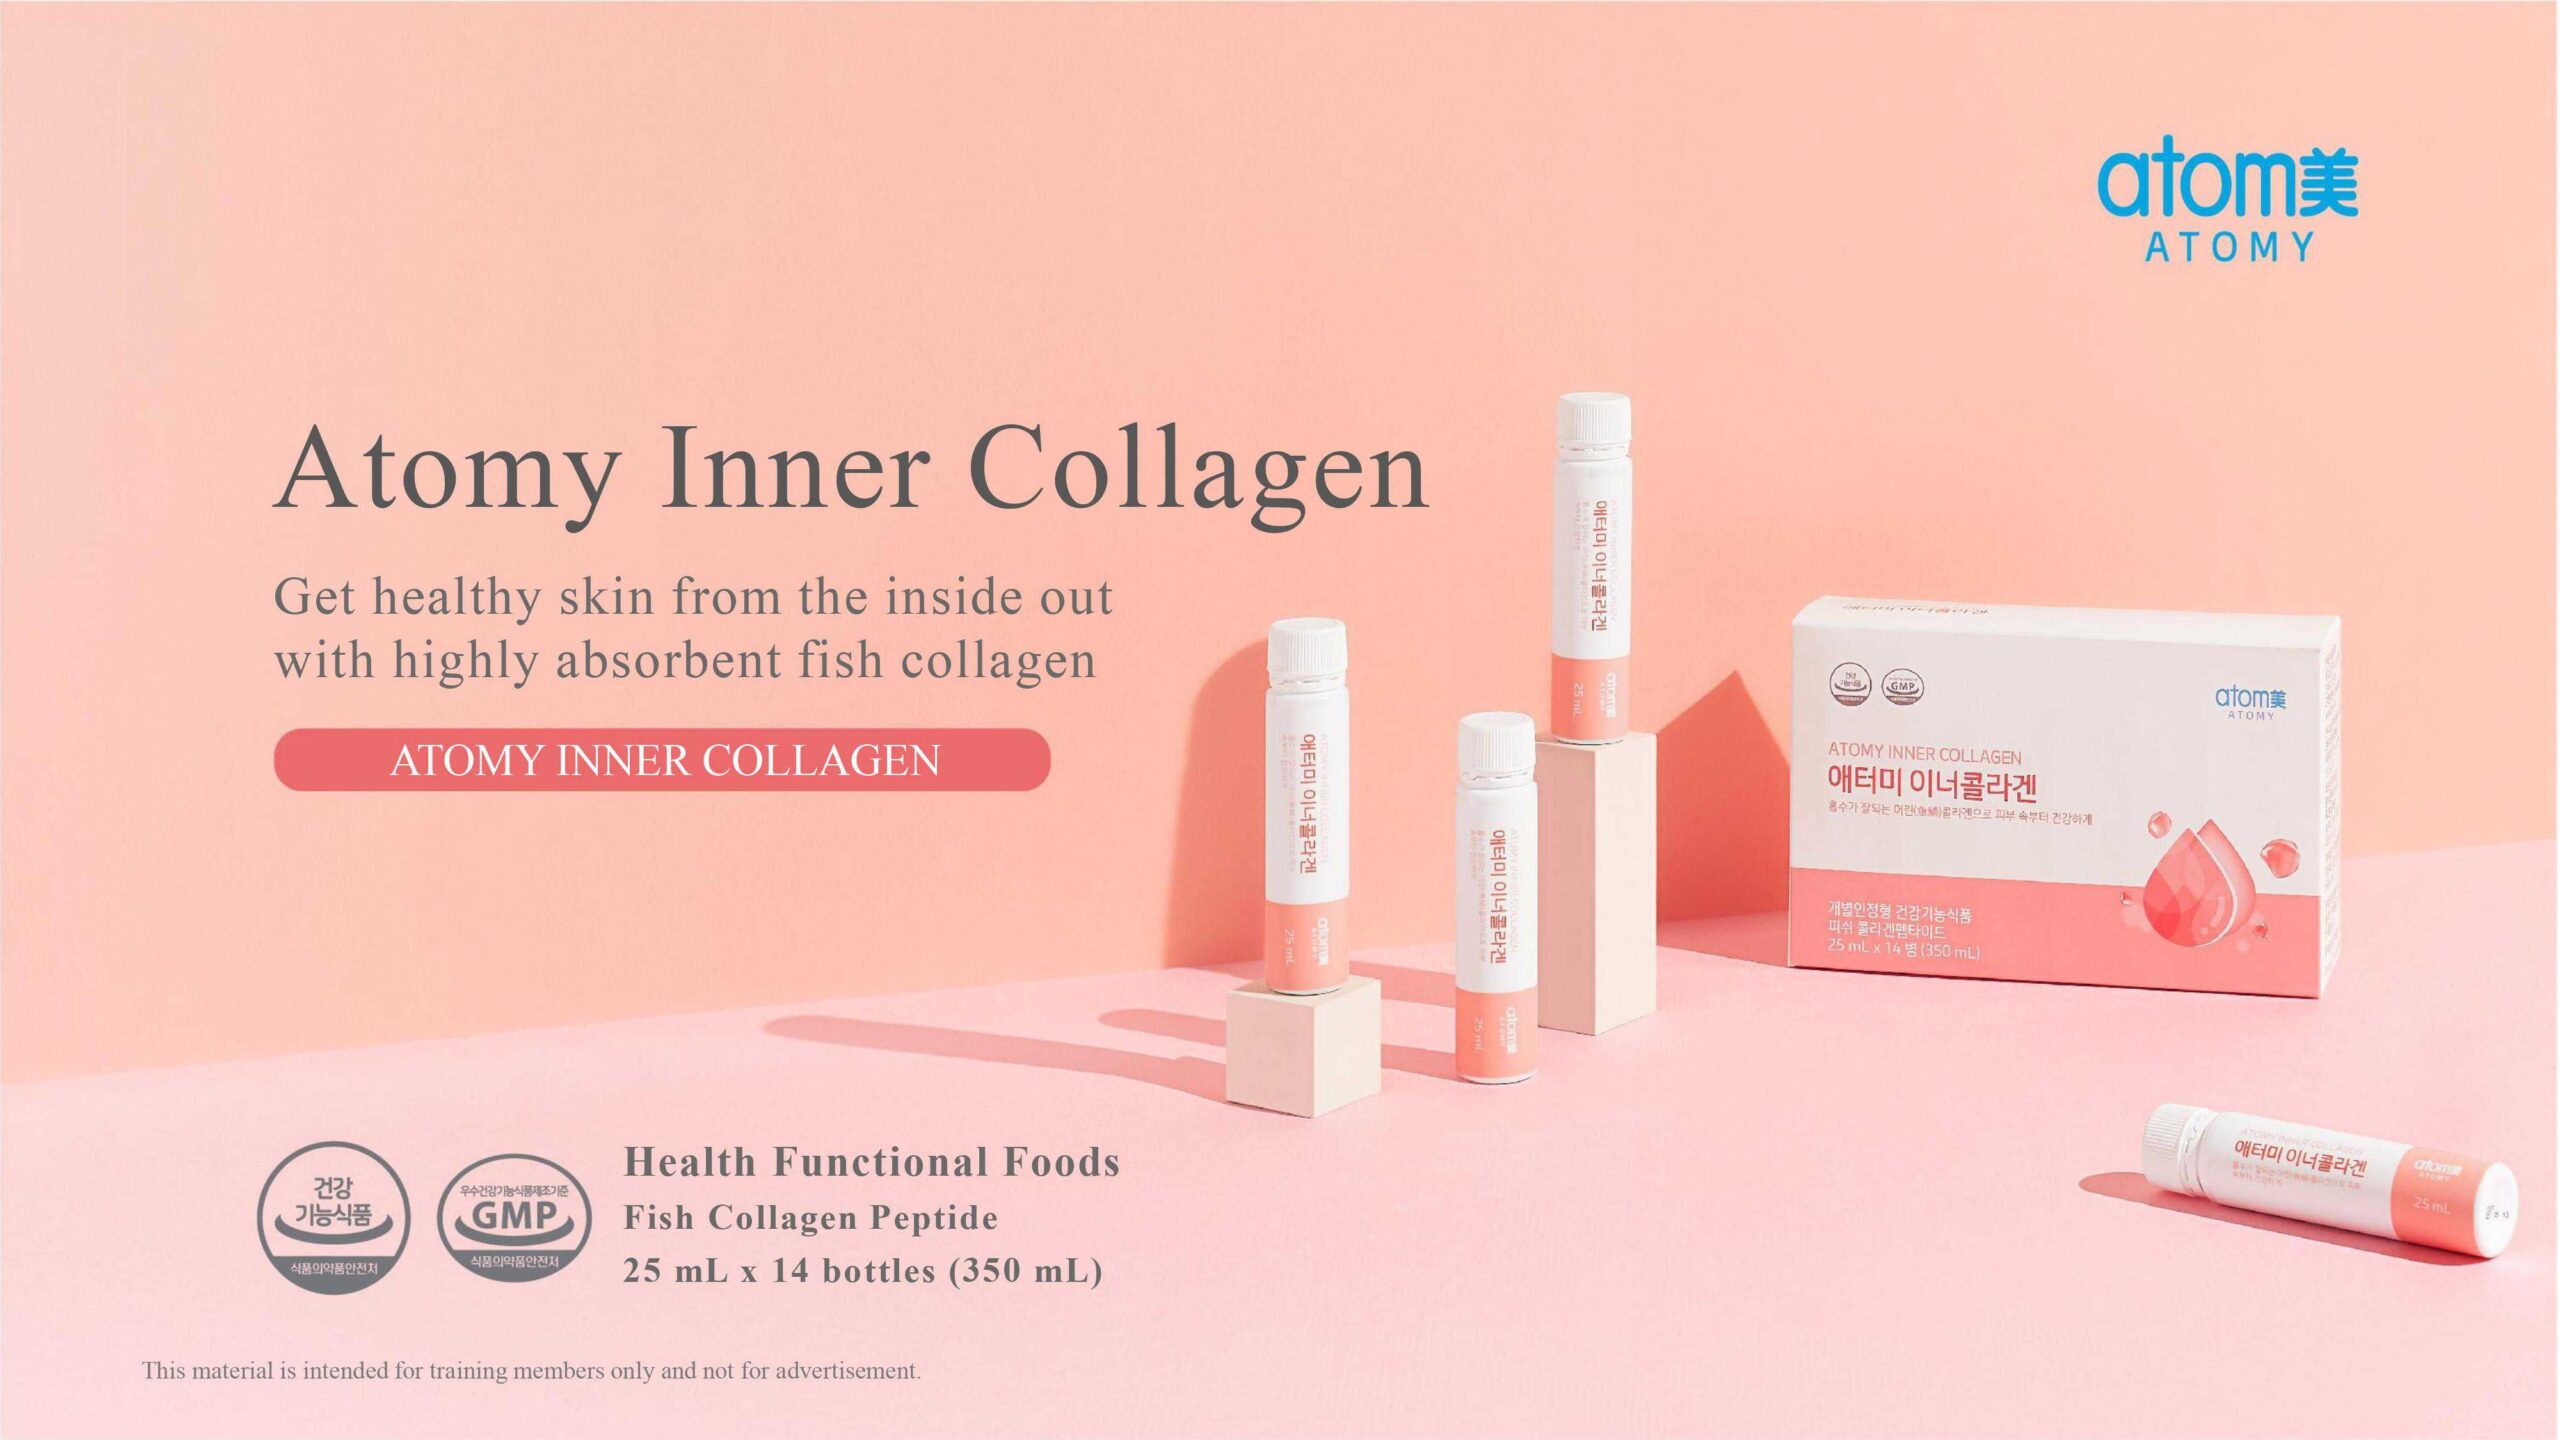 ATOMY Inner Collagen